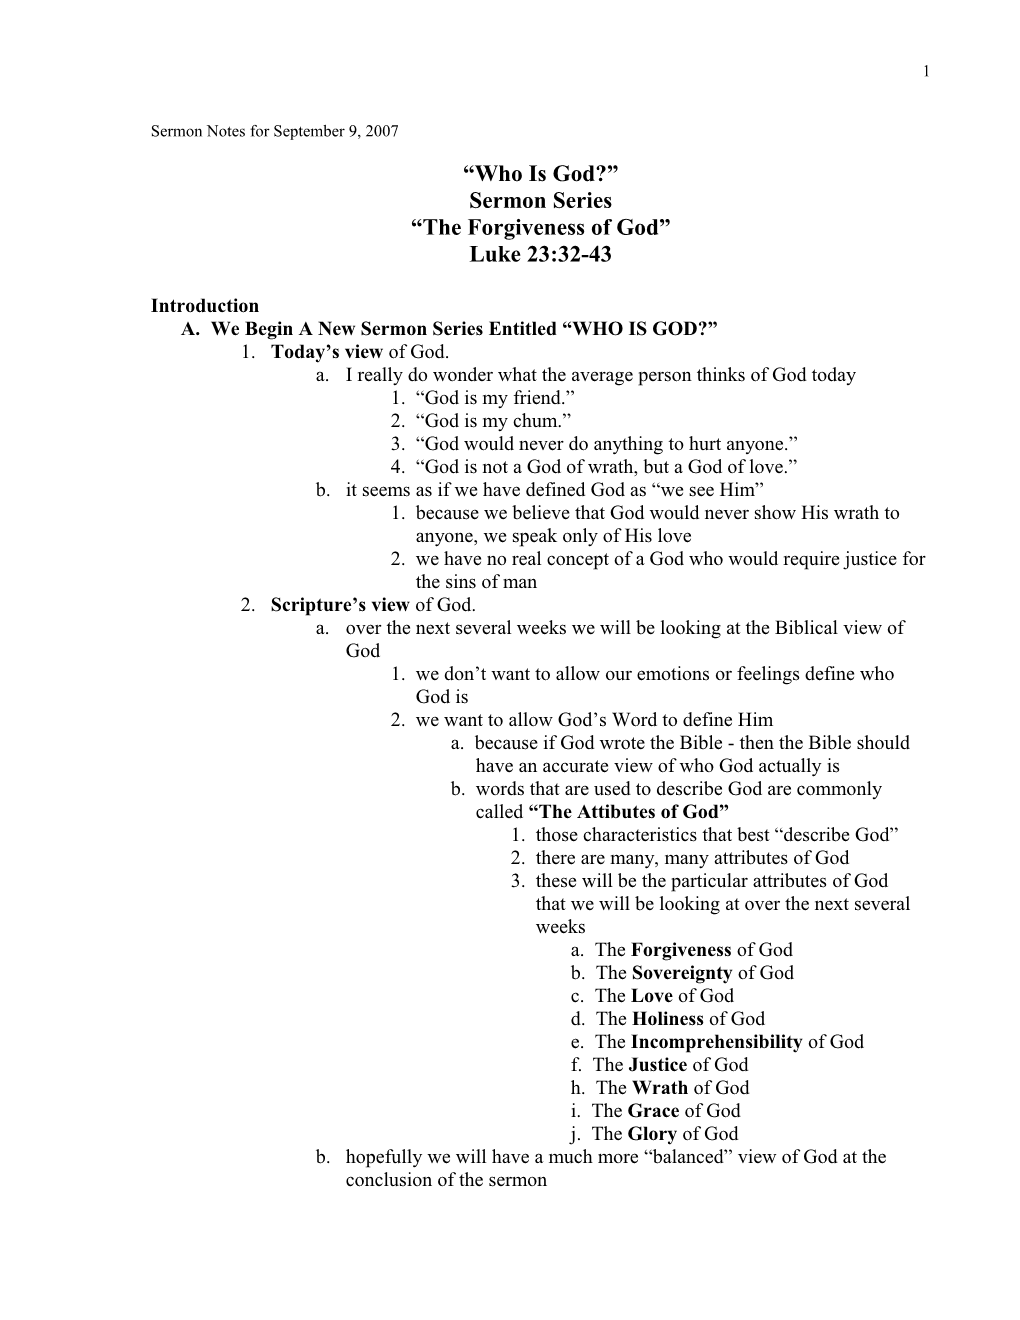 Sermon Notes for April 13, 2003